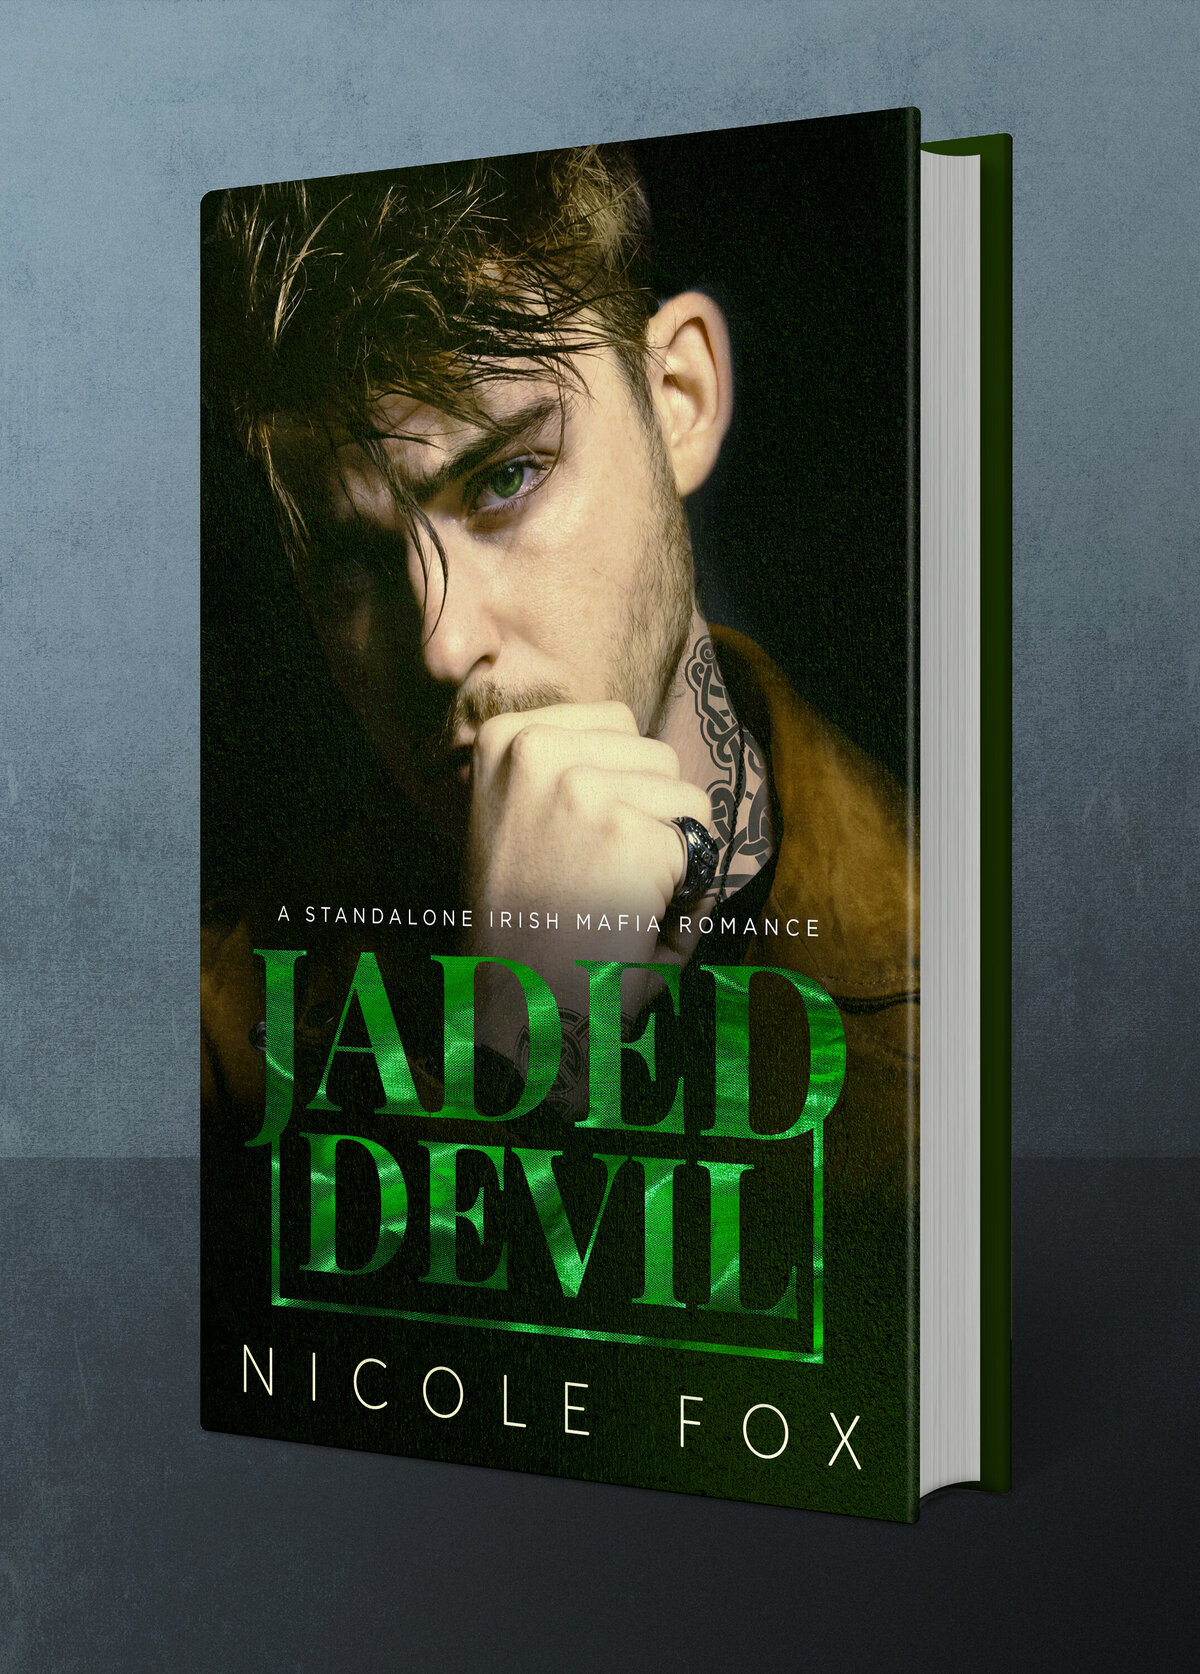 Jaded Devil by Nicole Fox